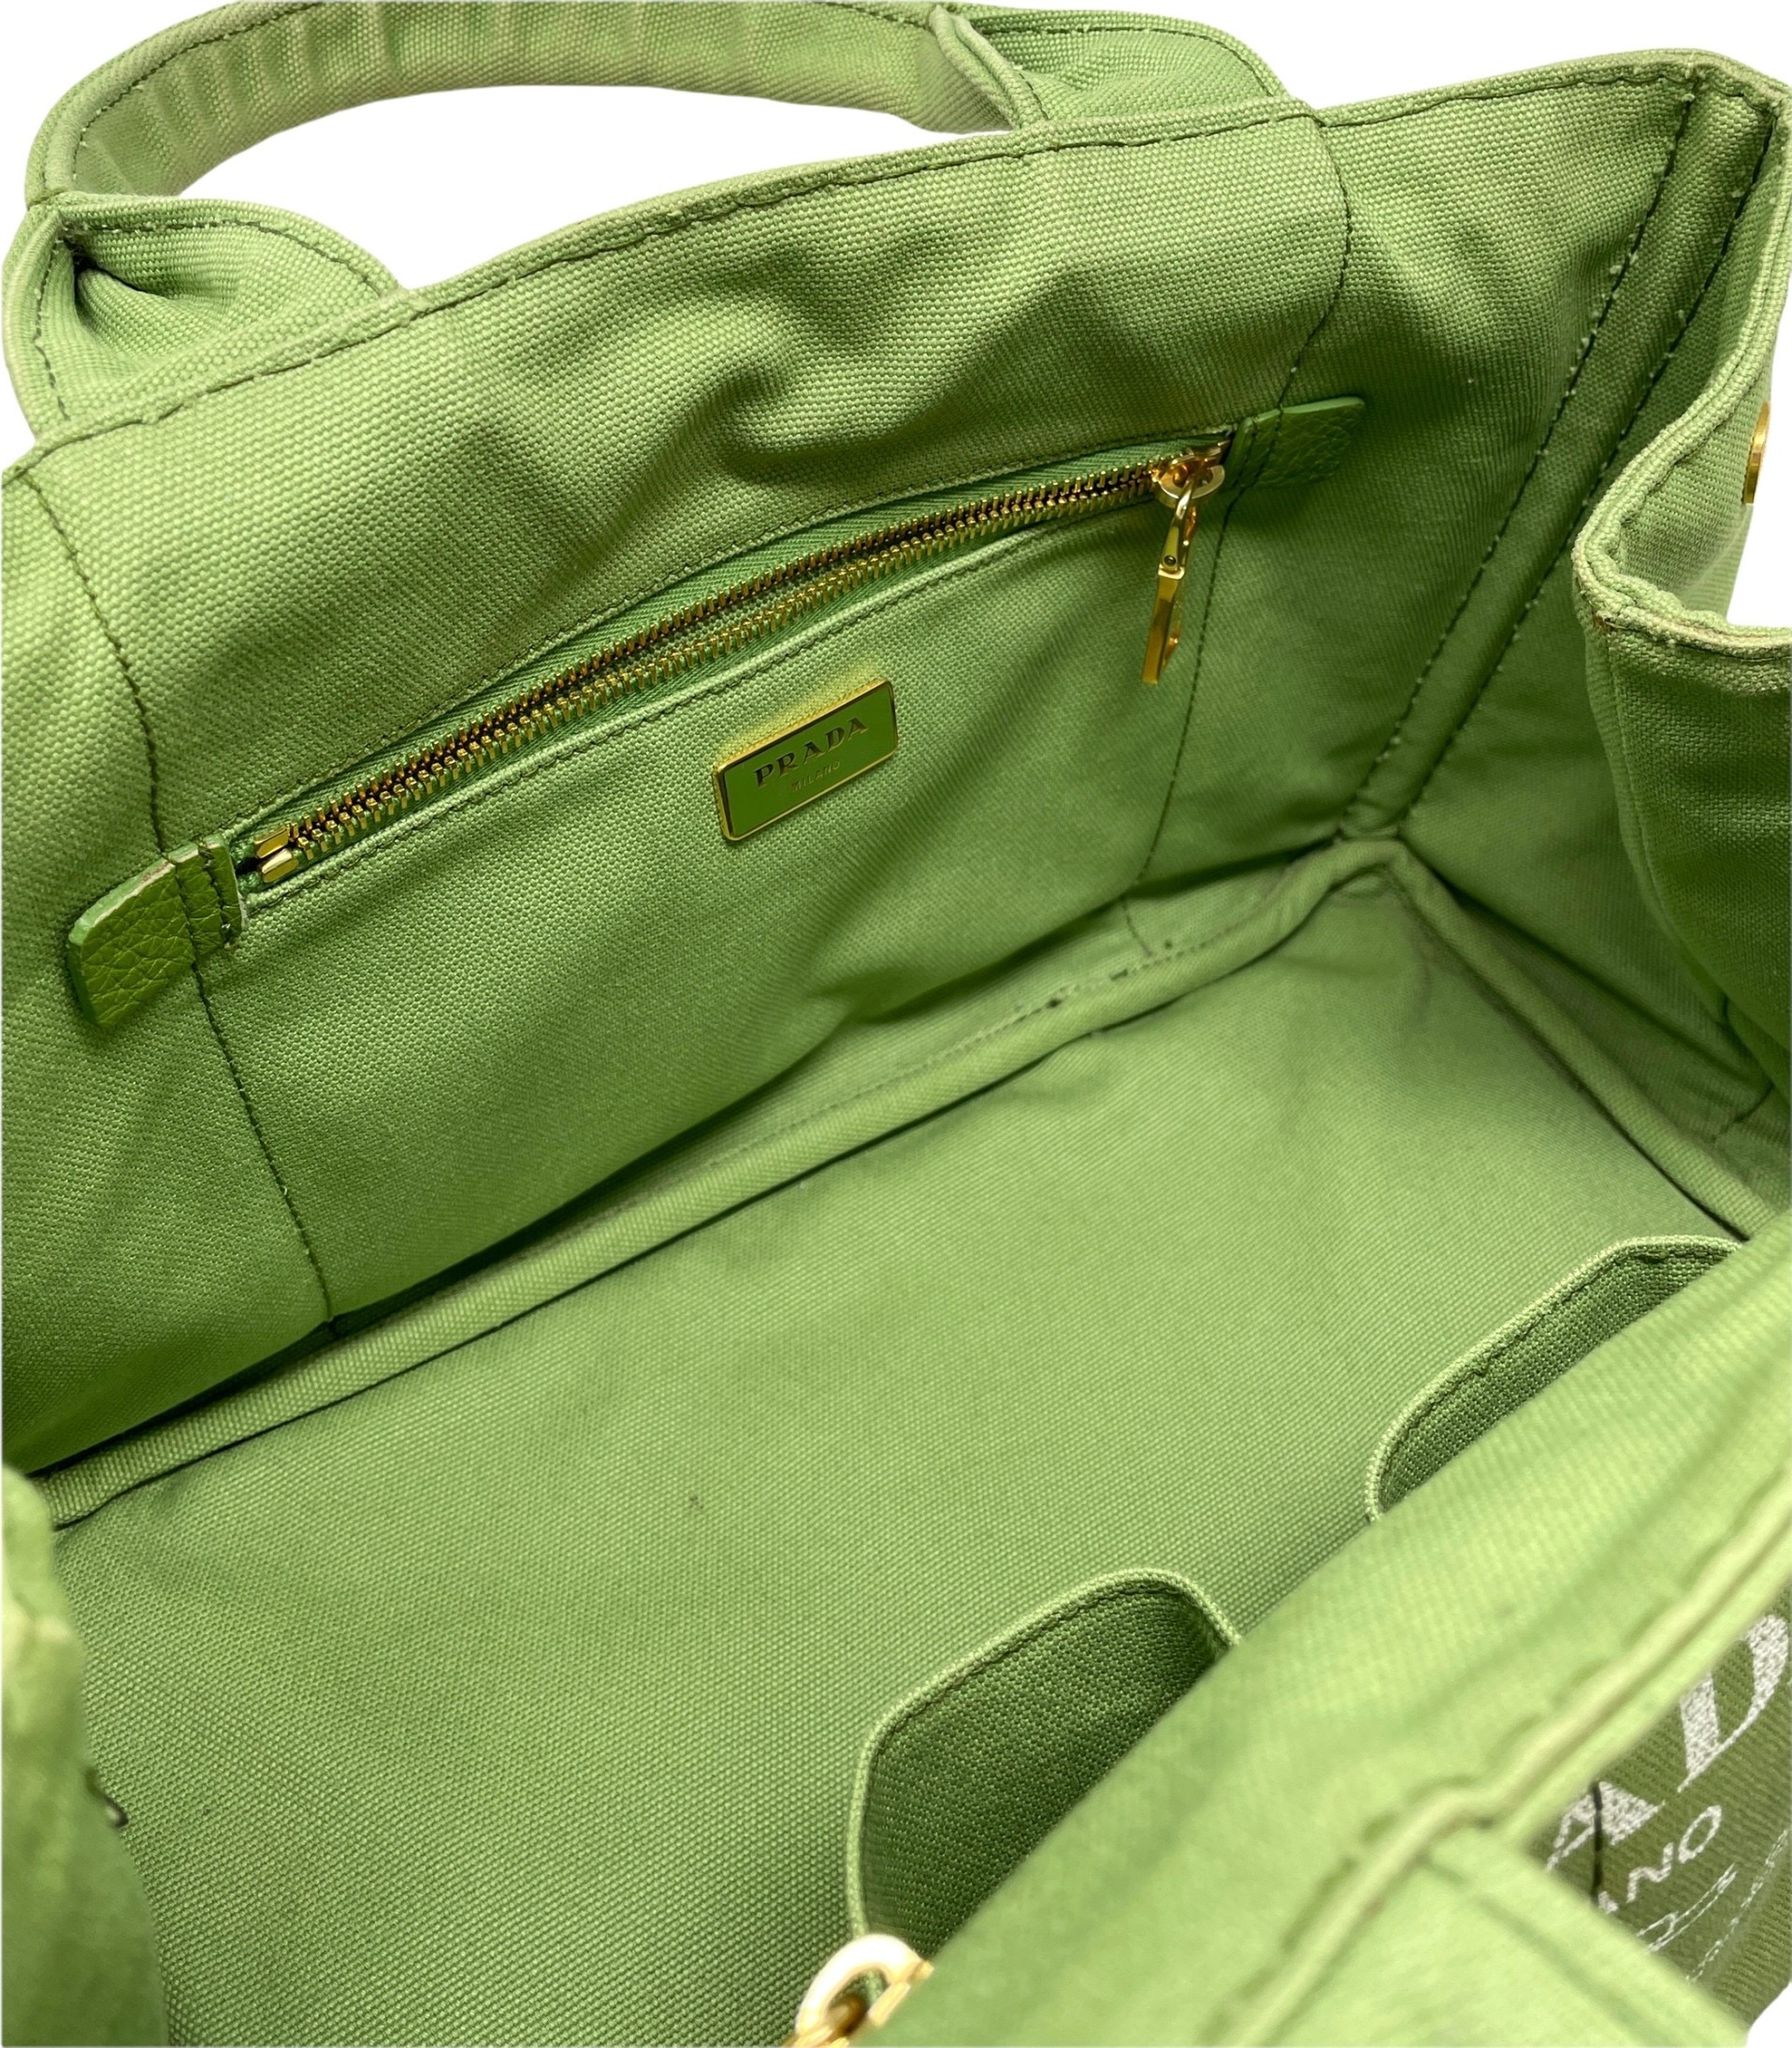 Prada Olive Green Canvas Tote - Handbags